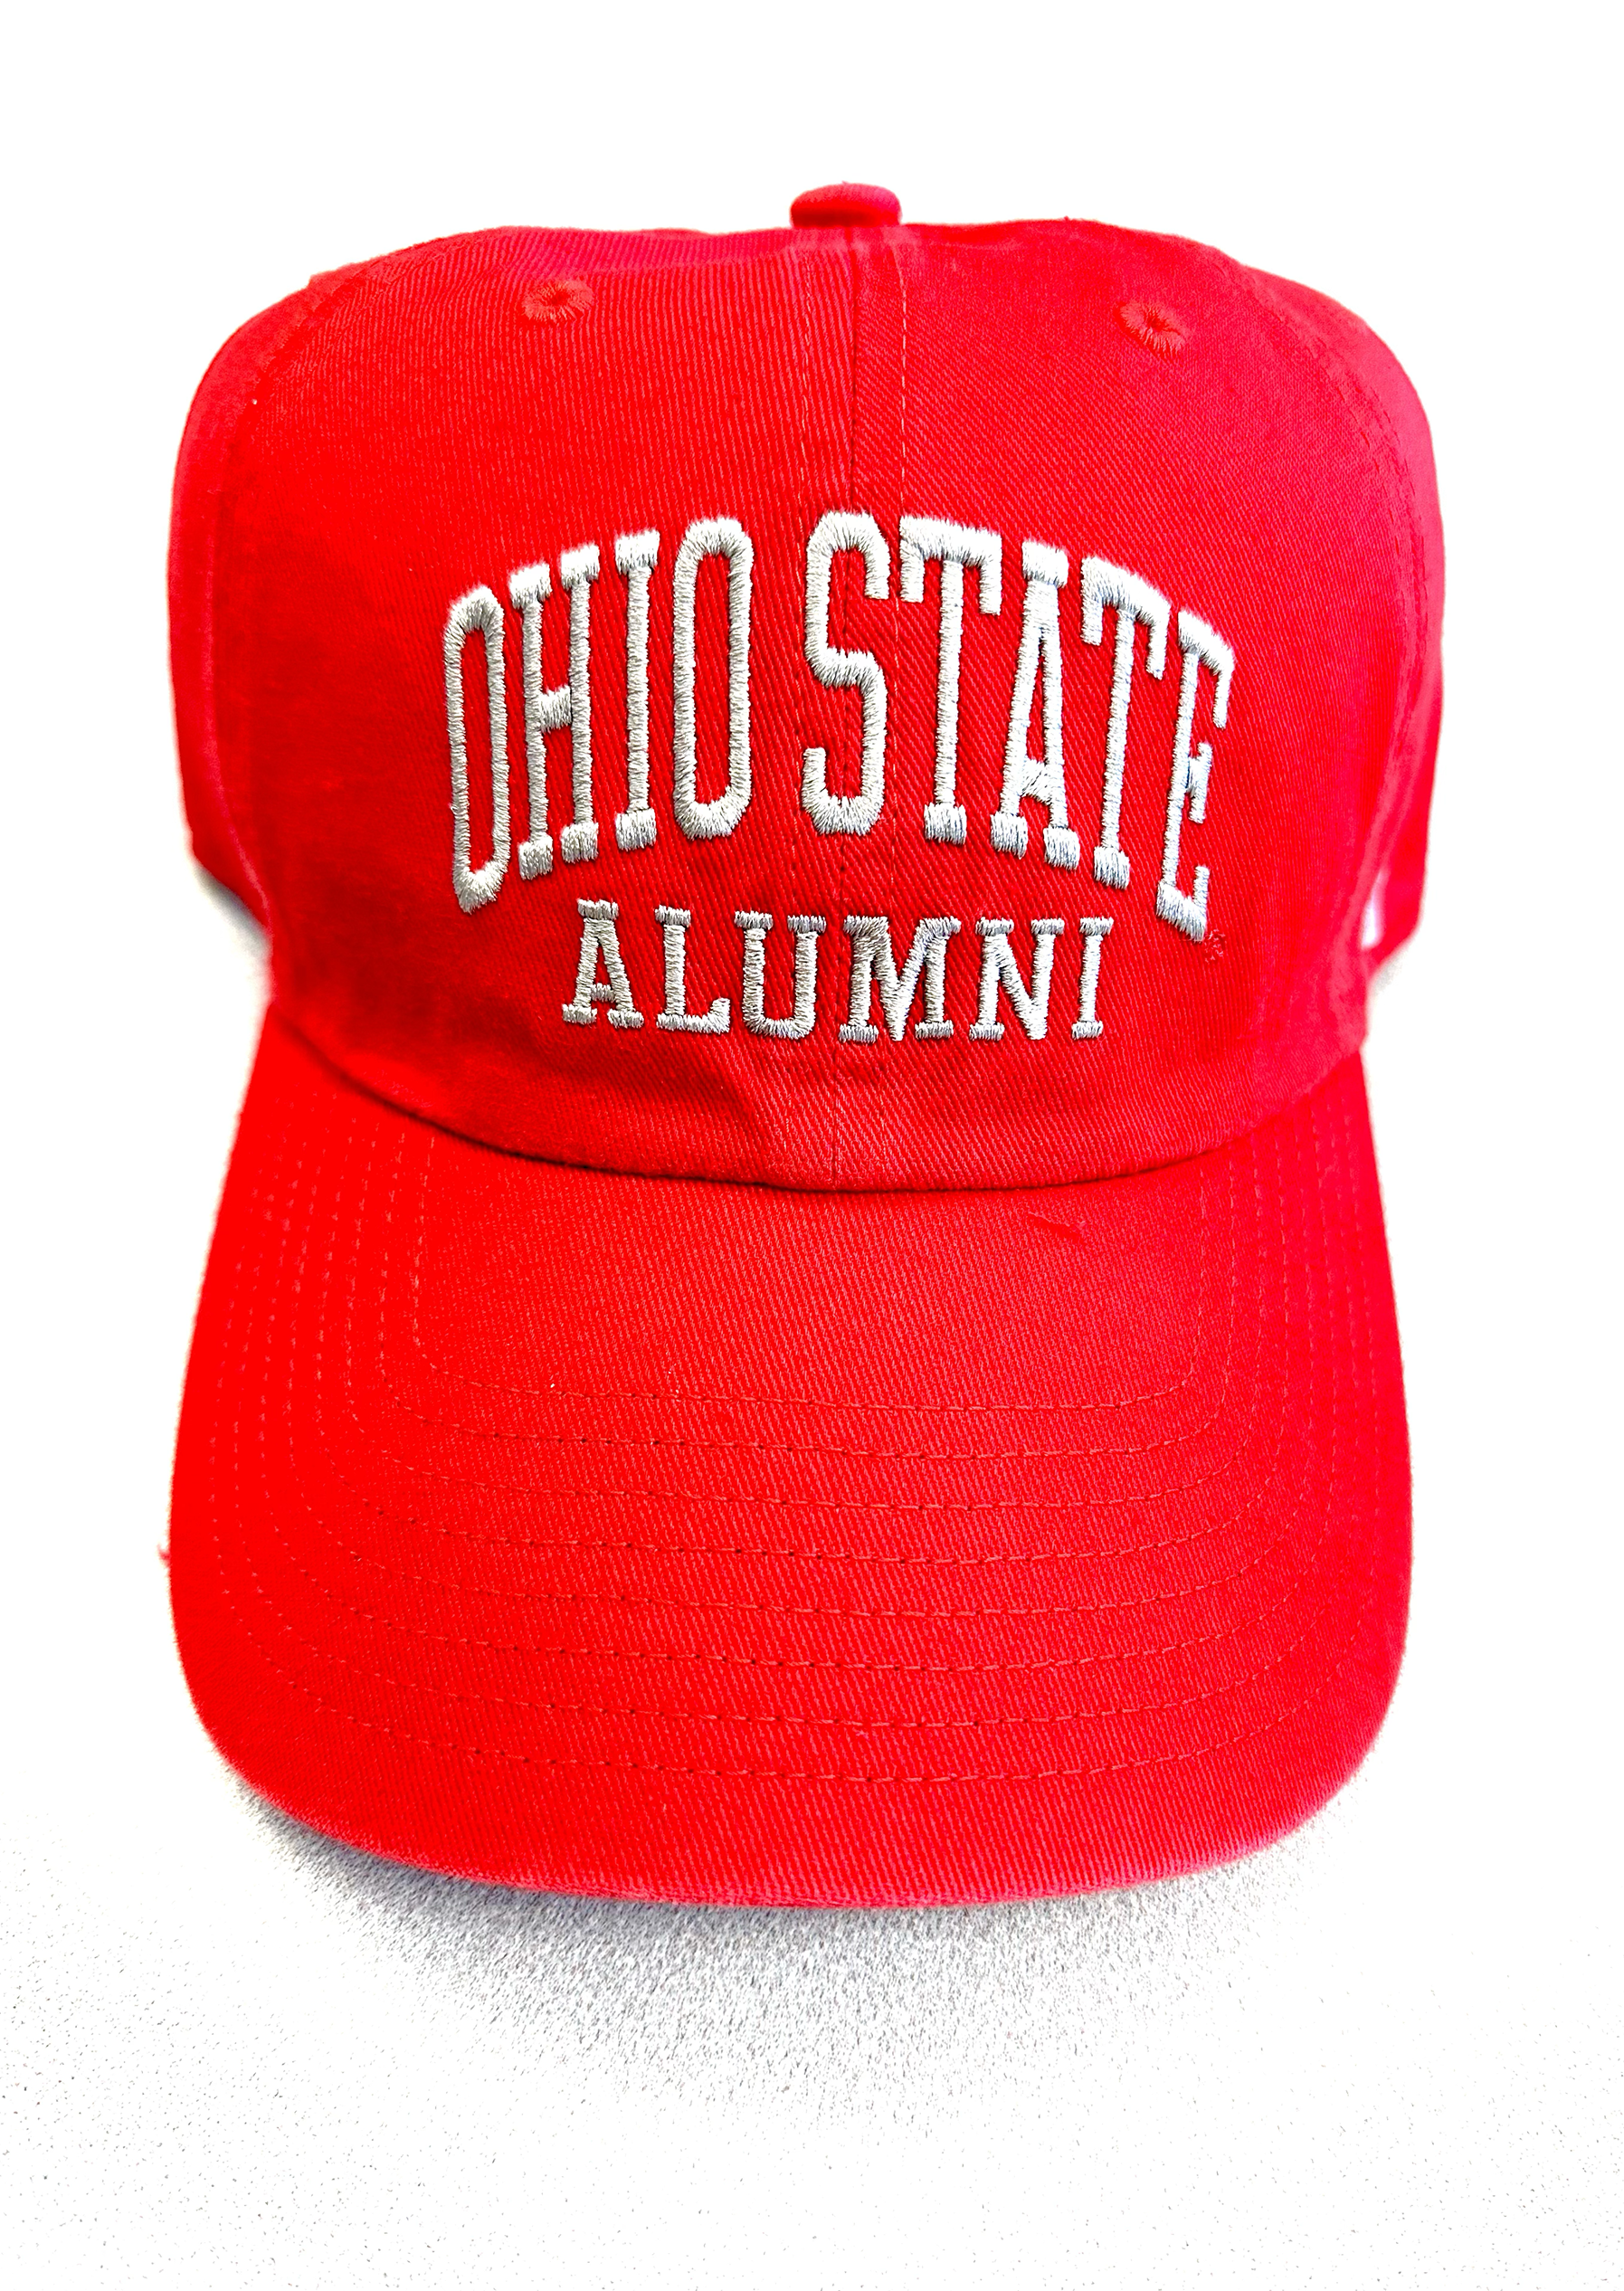 Buckeye Hats - OSU Sports Fans - Officially Licensed Merchandise